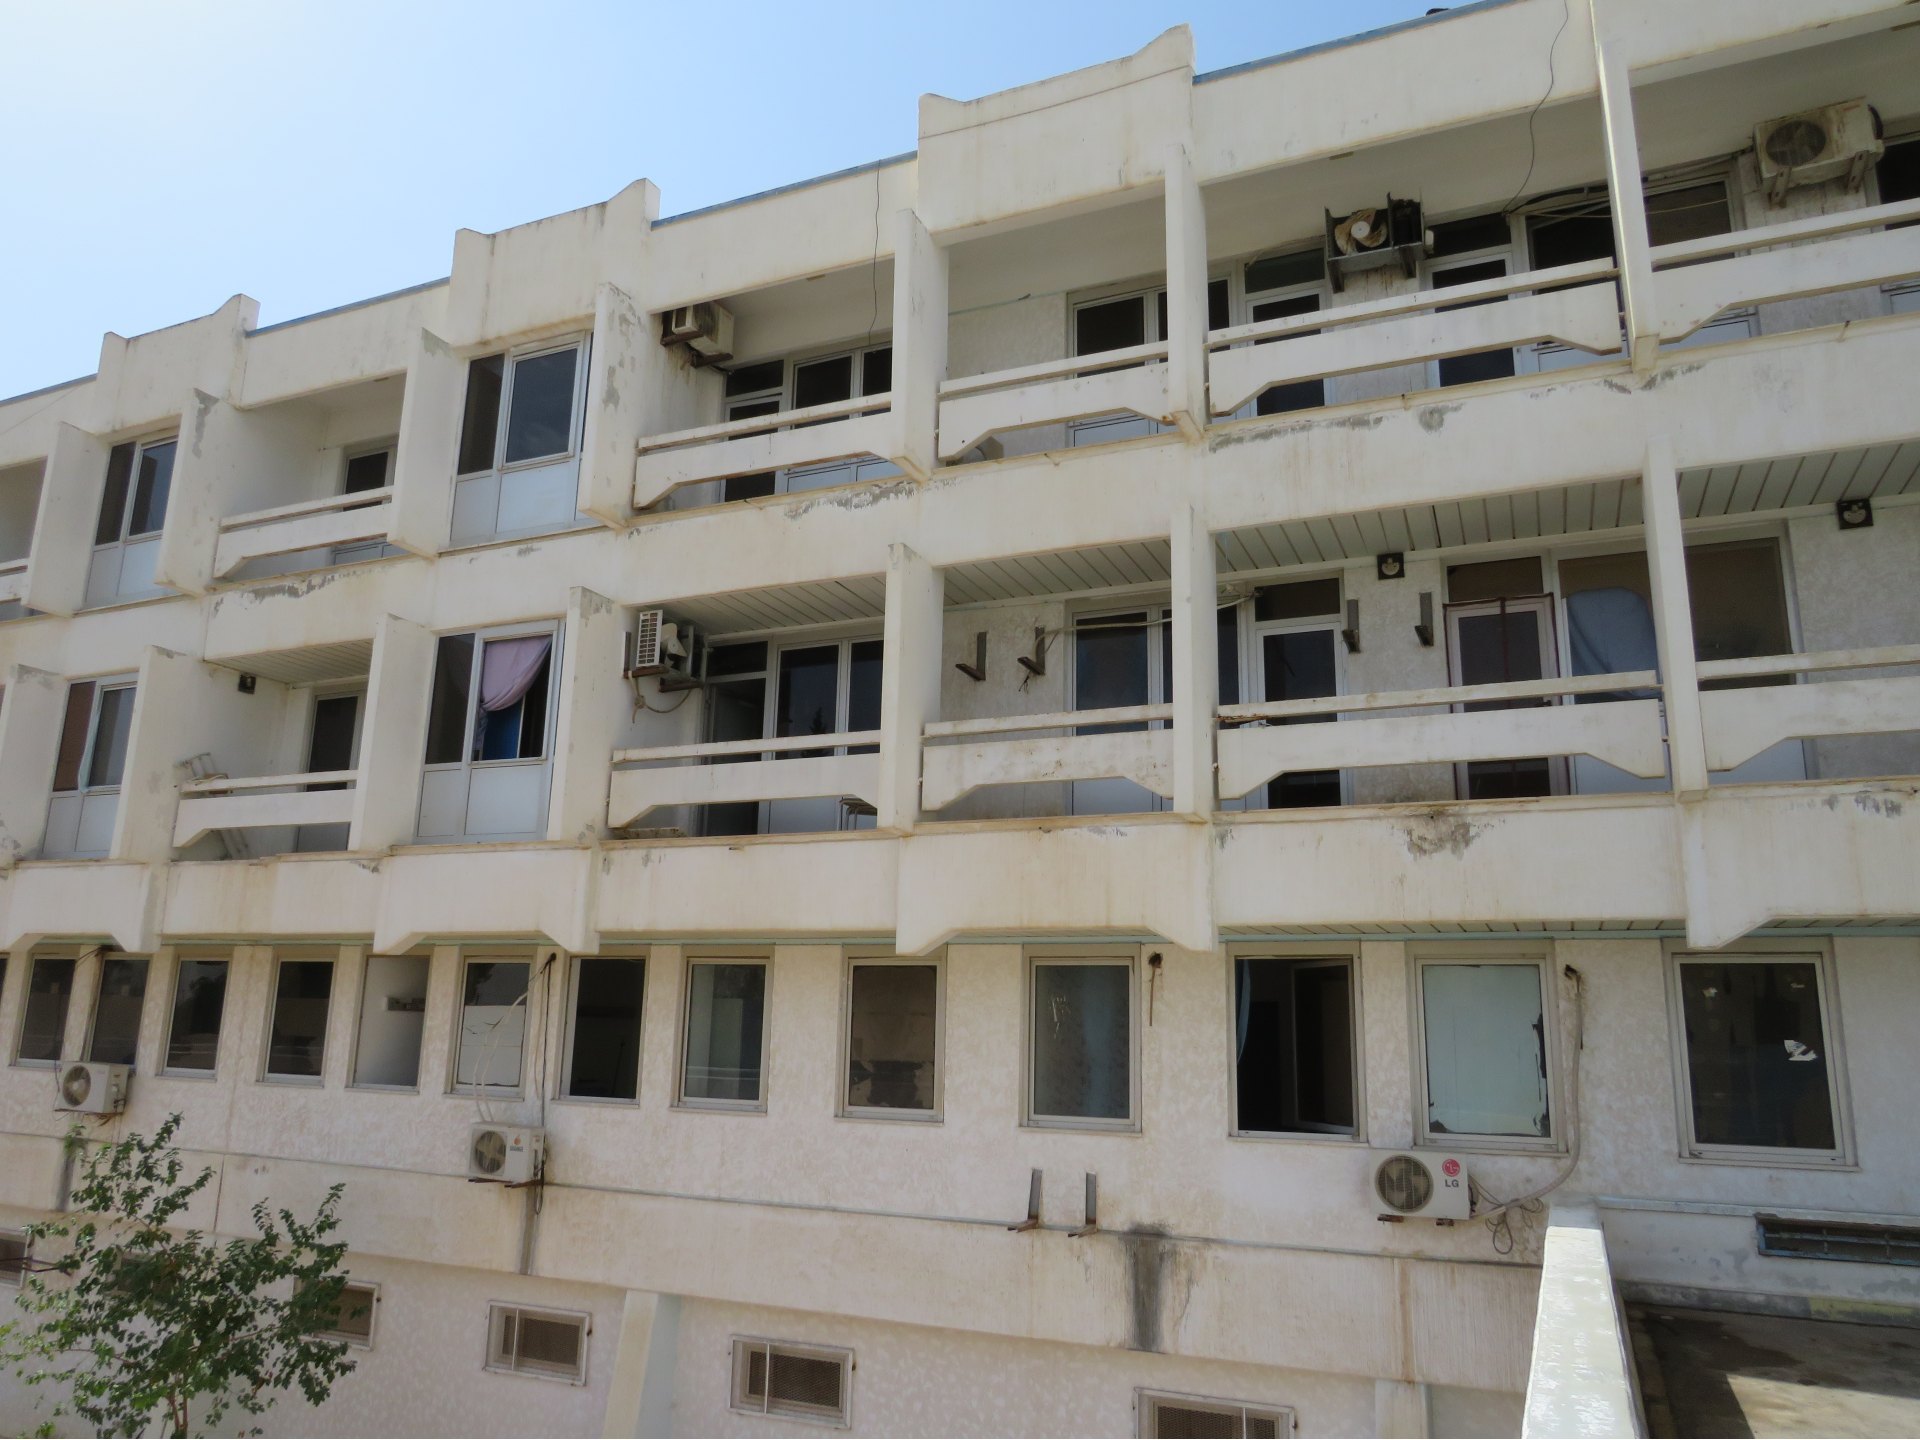 Accommodation in Esbia hospital used by Wagner mercenaries as a headquarters (MEE/Daniel Hilton)